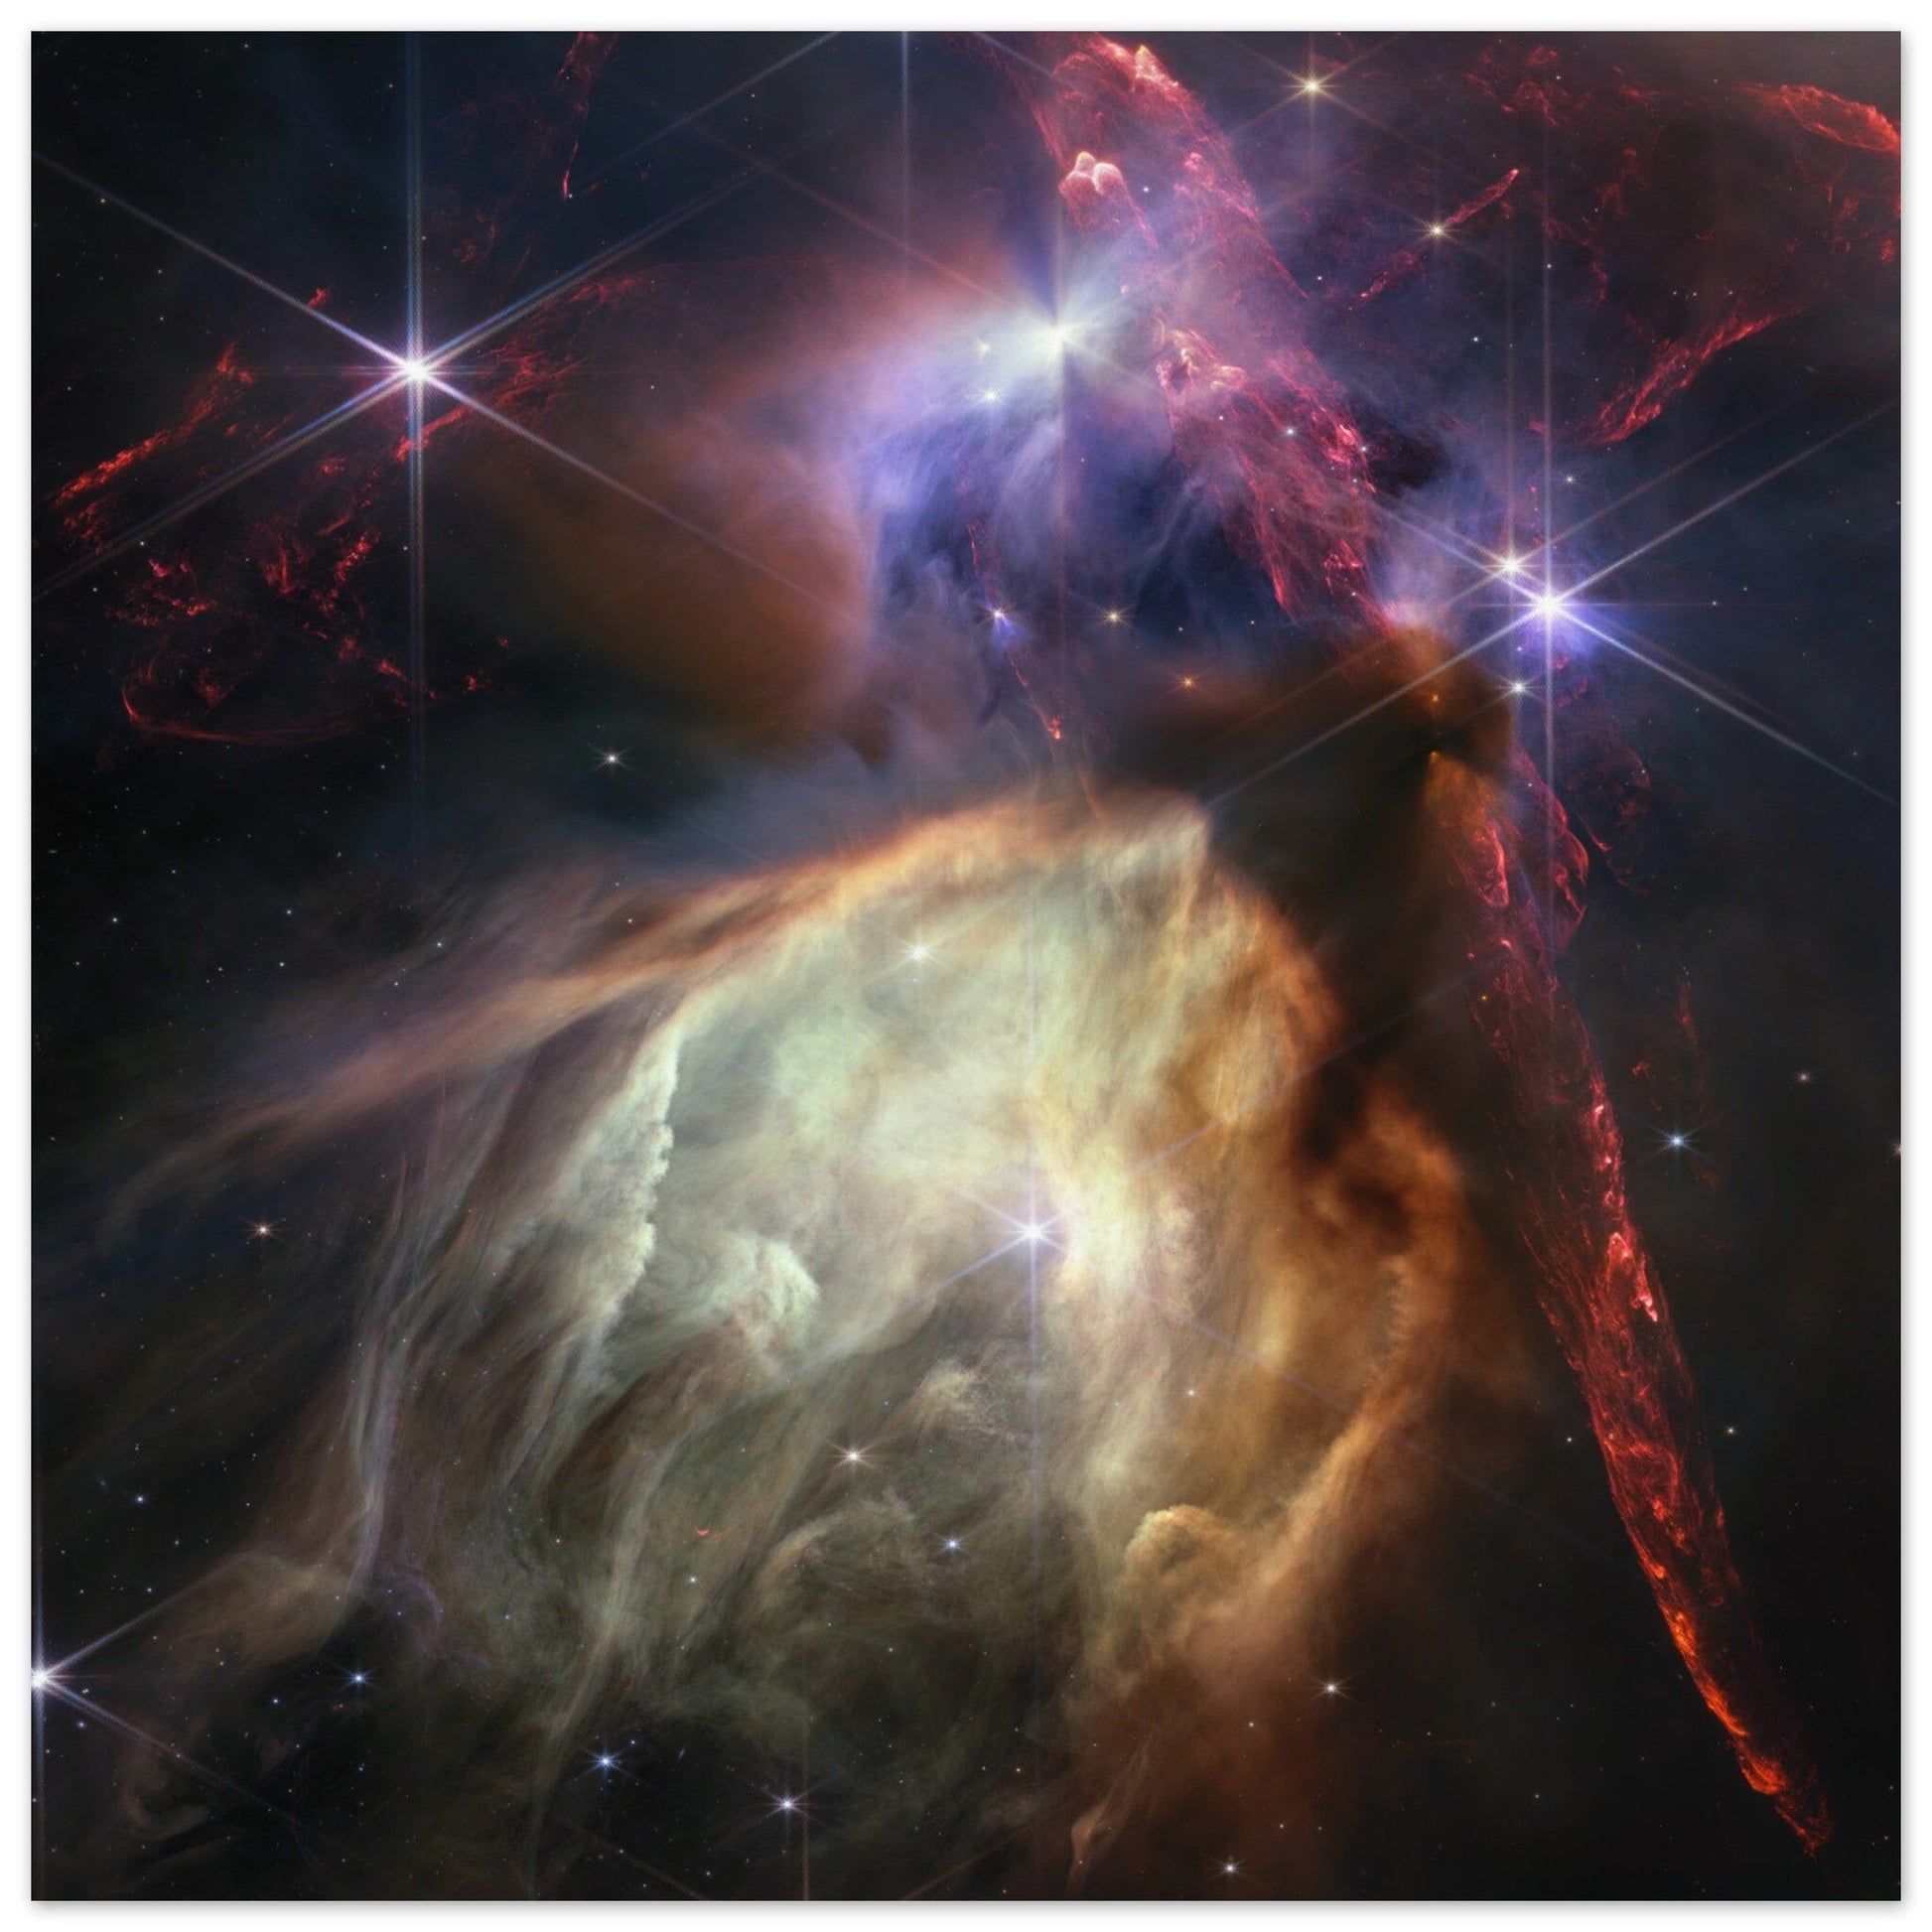 NASA - Poster - 21. Rho Ophiuchi (NIRCam Image) - James Webb Space Telescope Poster Only TP Aviation Art 50x50 cm / 20x20″ 